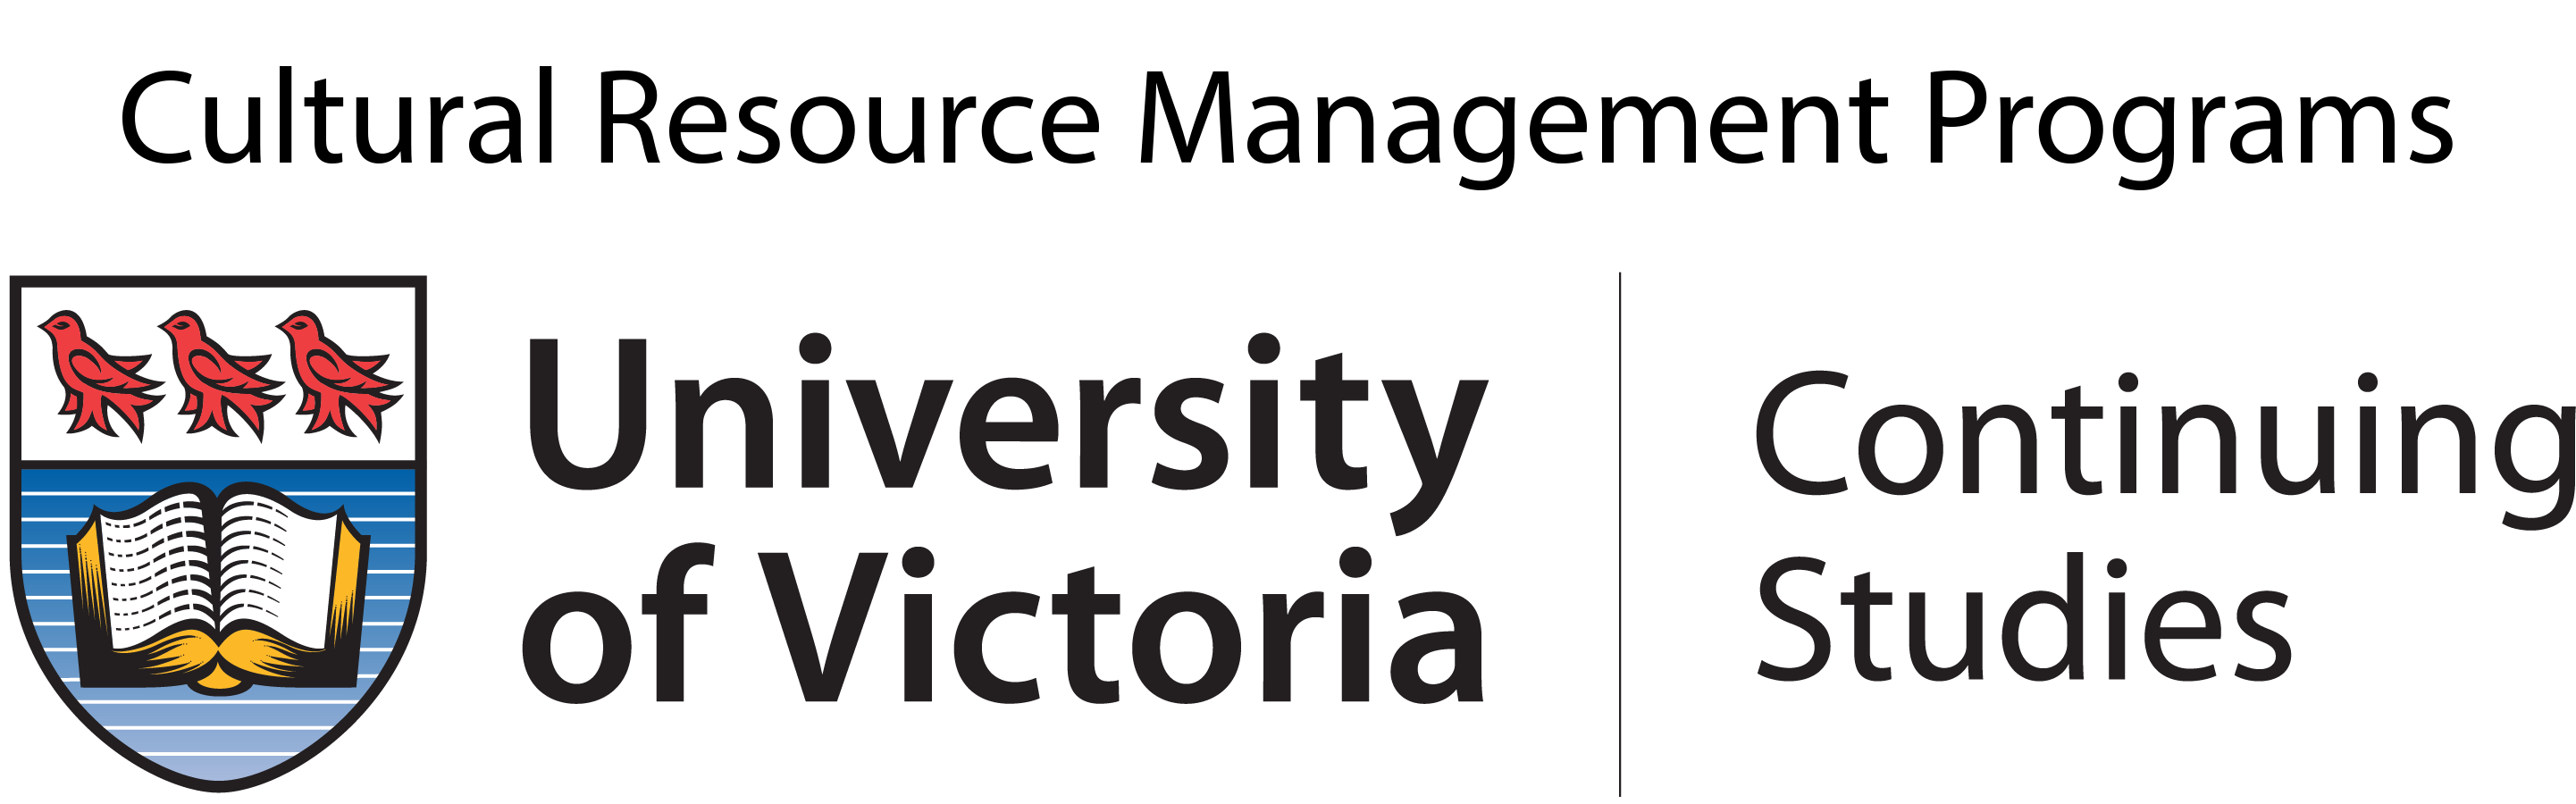 Cultural Resources Management Programs University of Victoria Continuing Studies